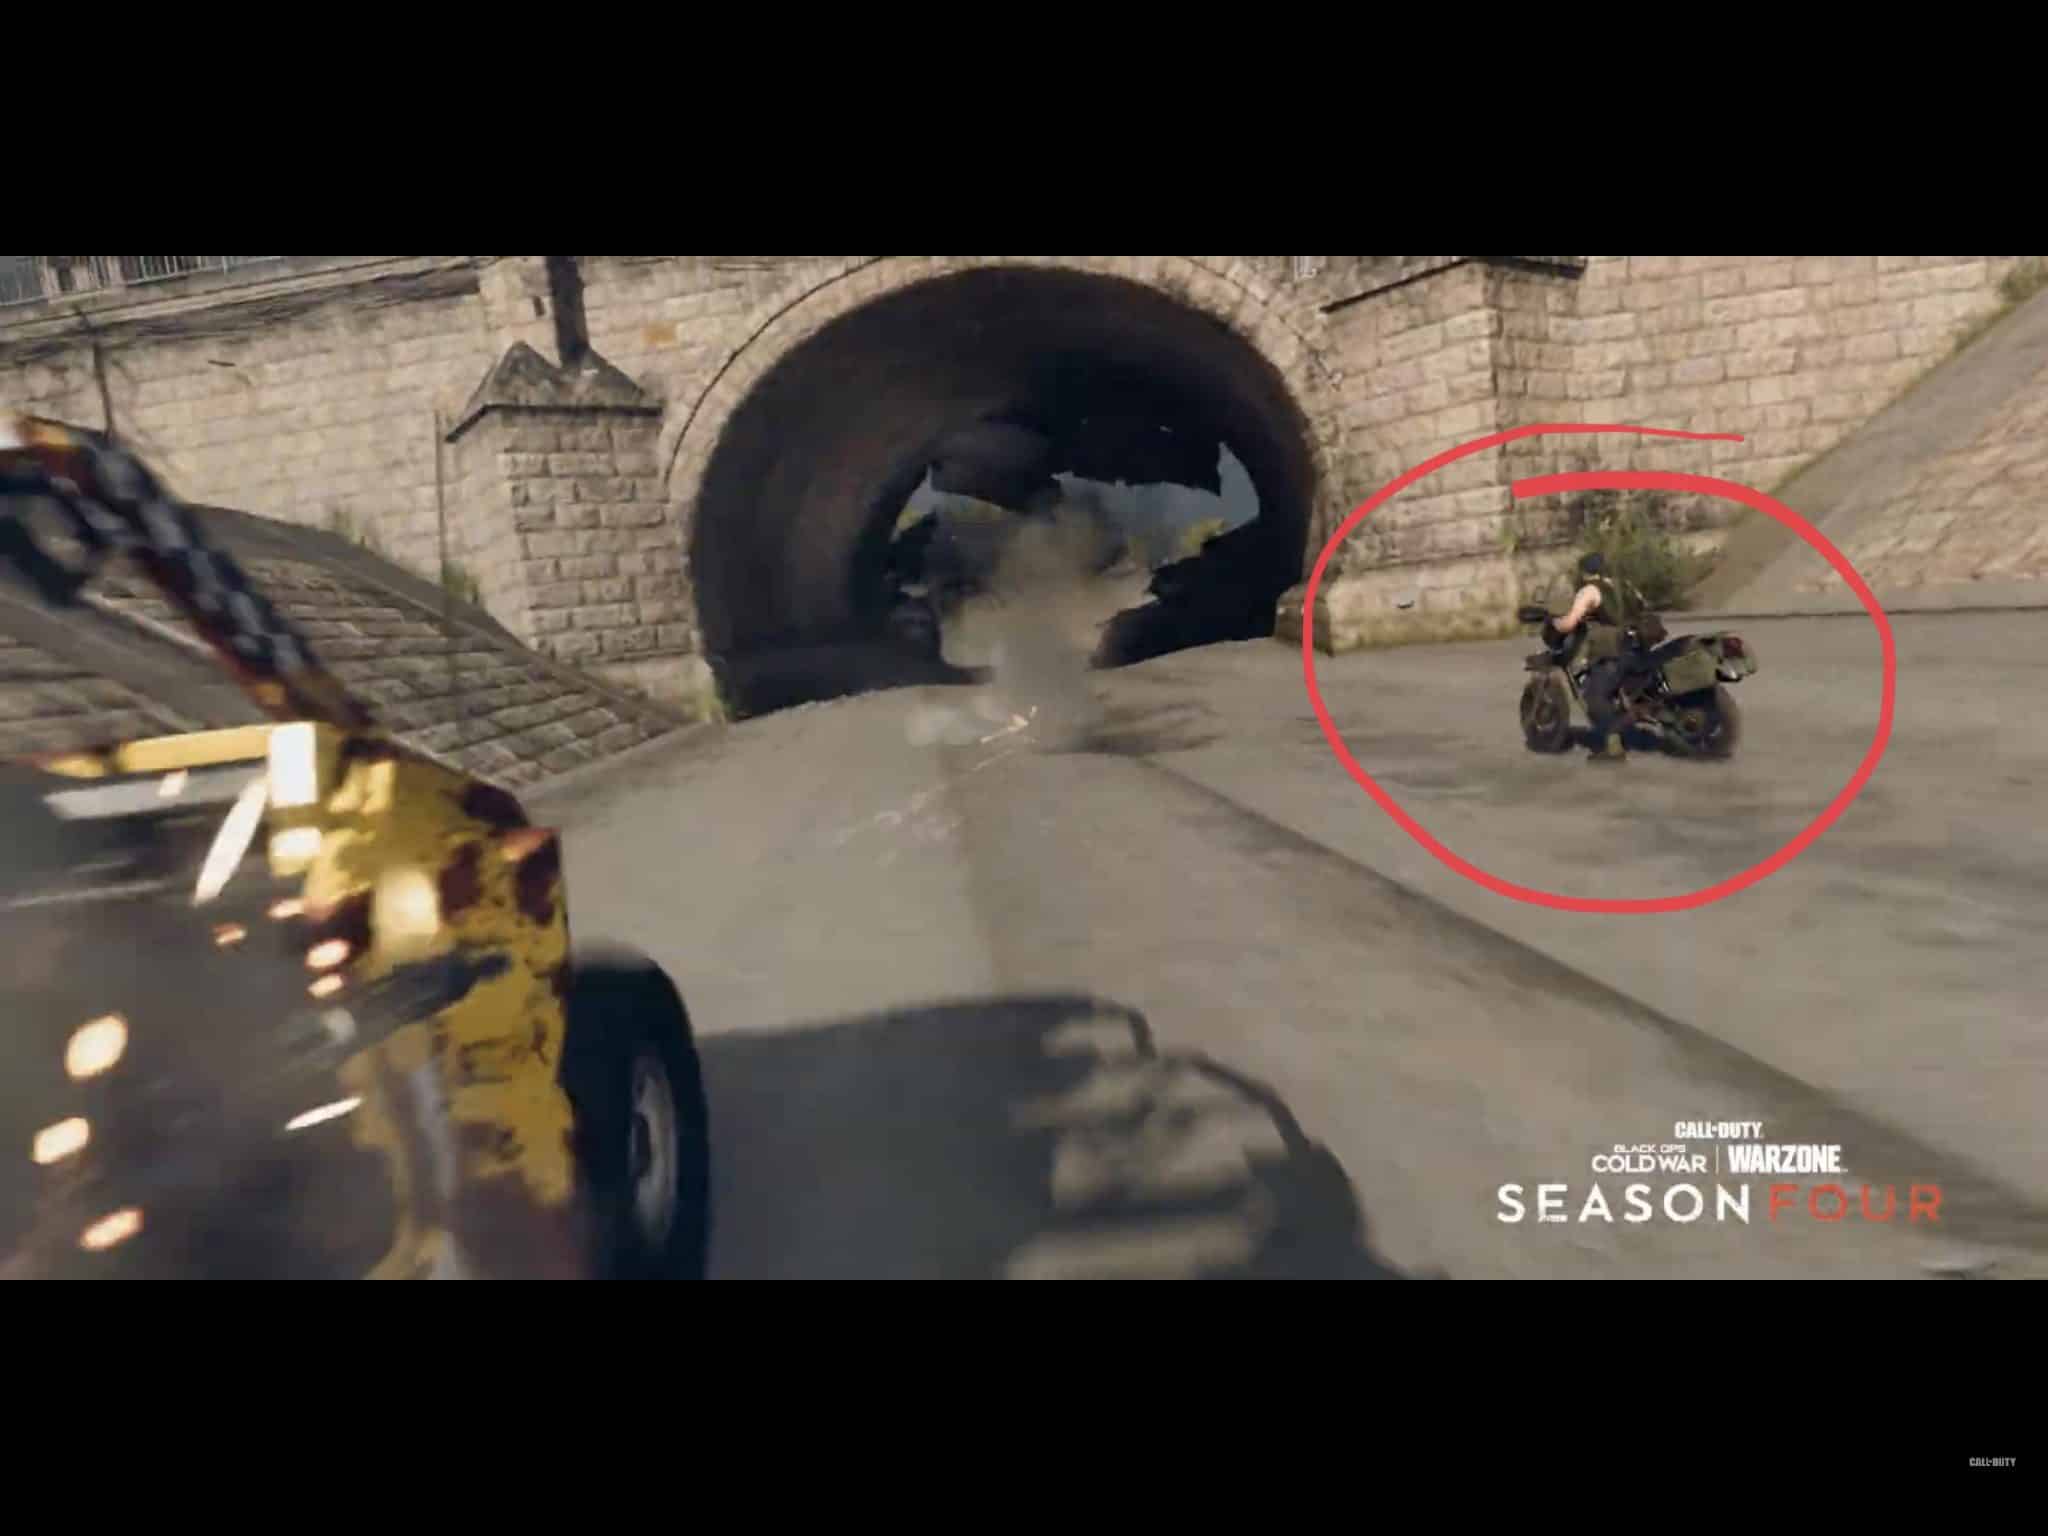 Motorbikes spotted in Warzone Season 4 trailer